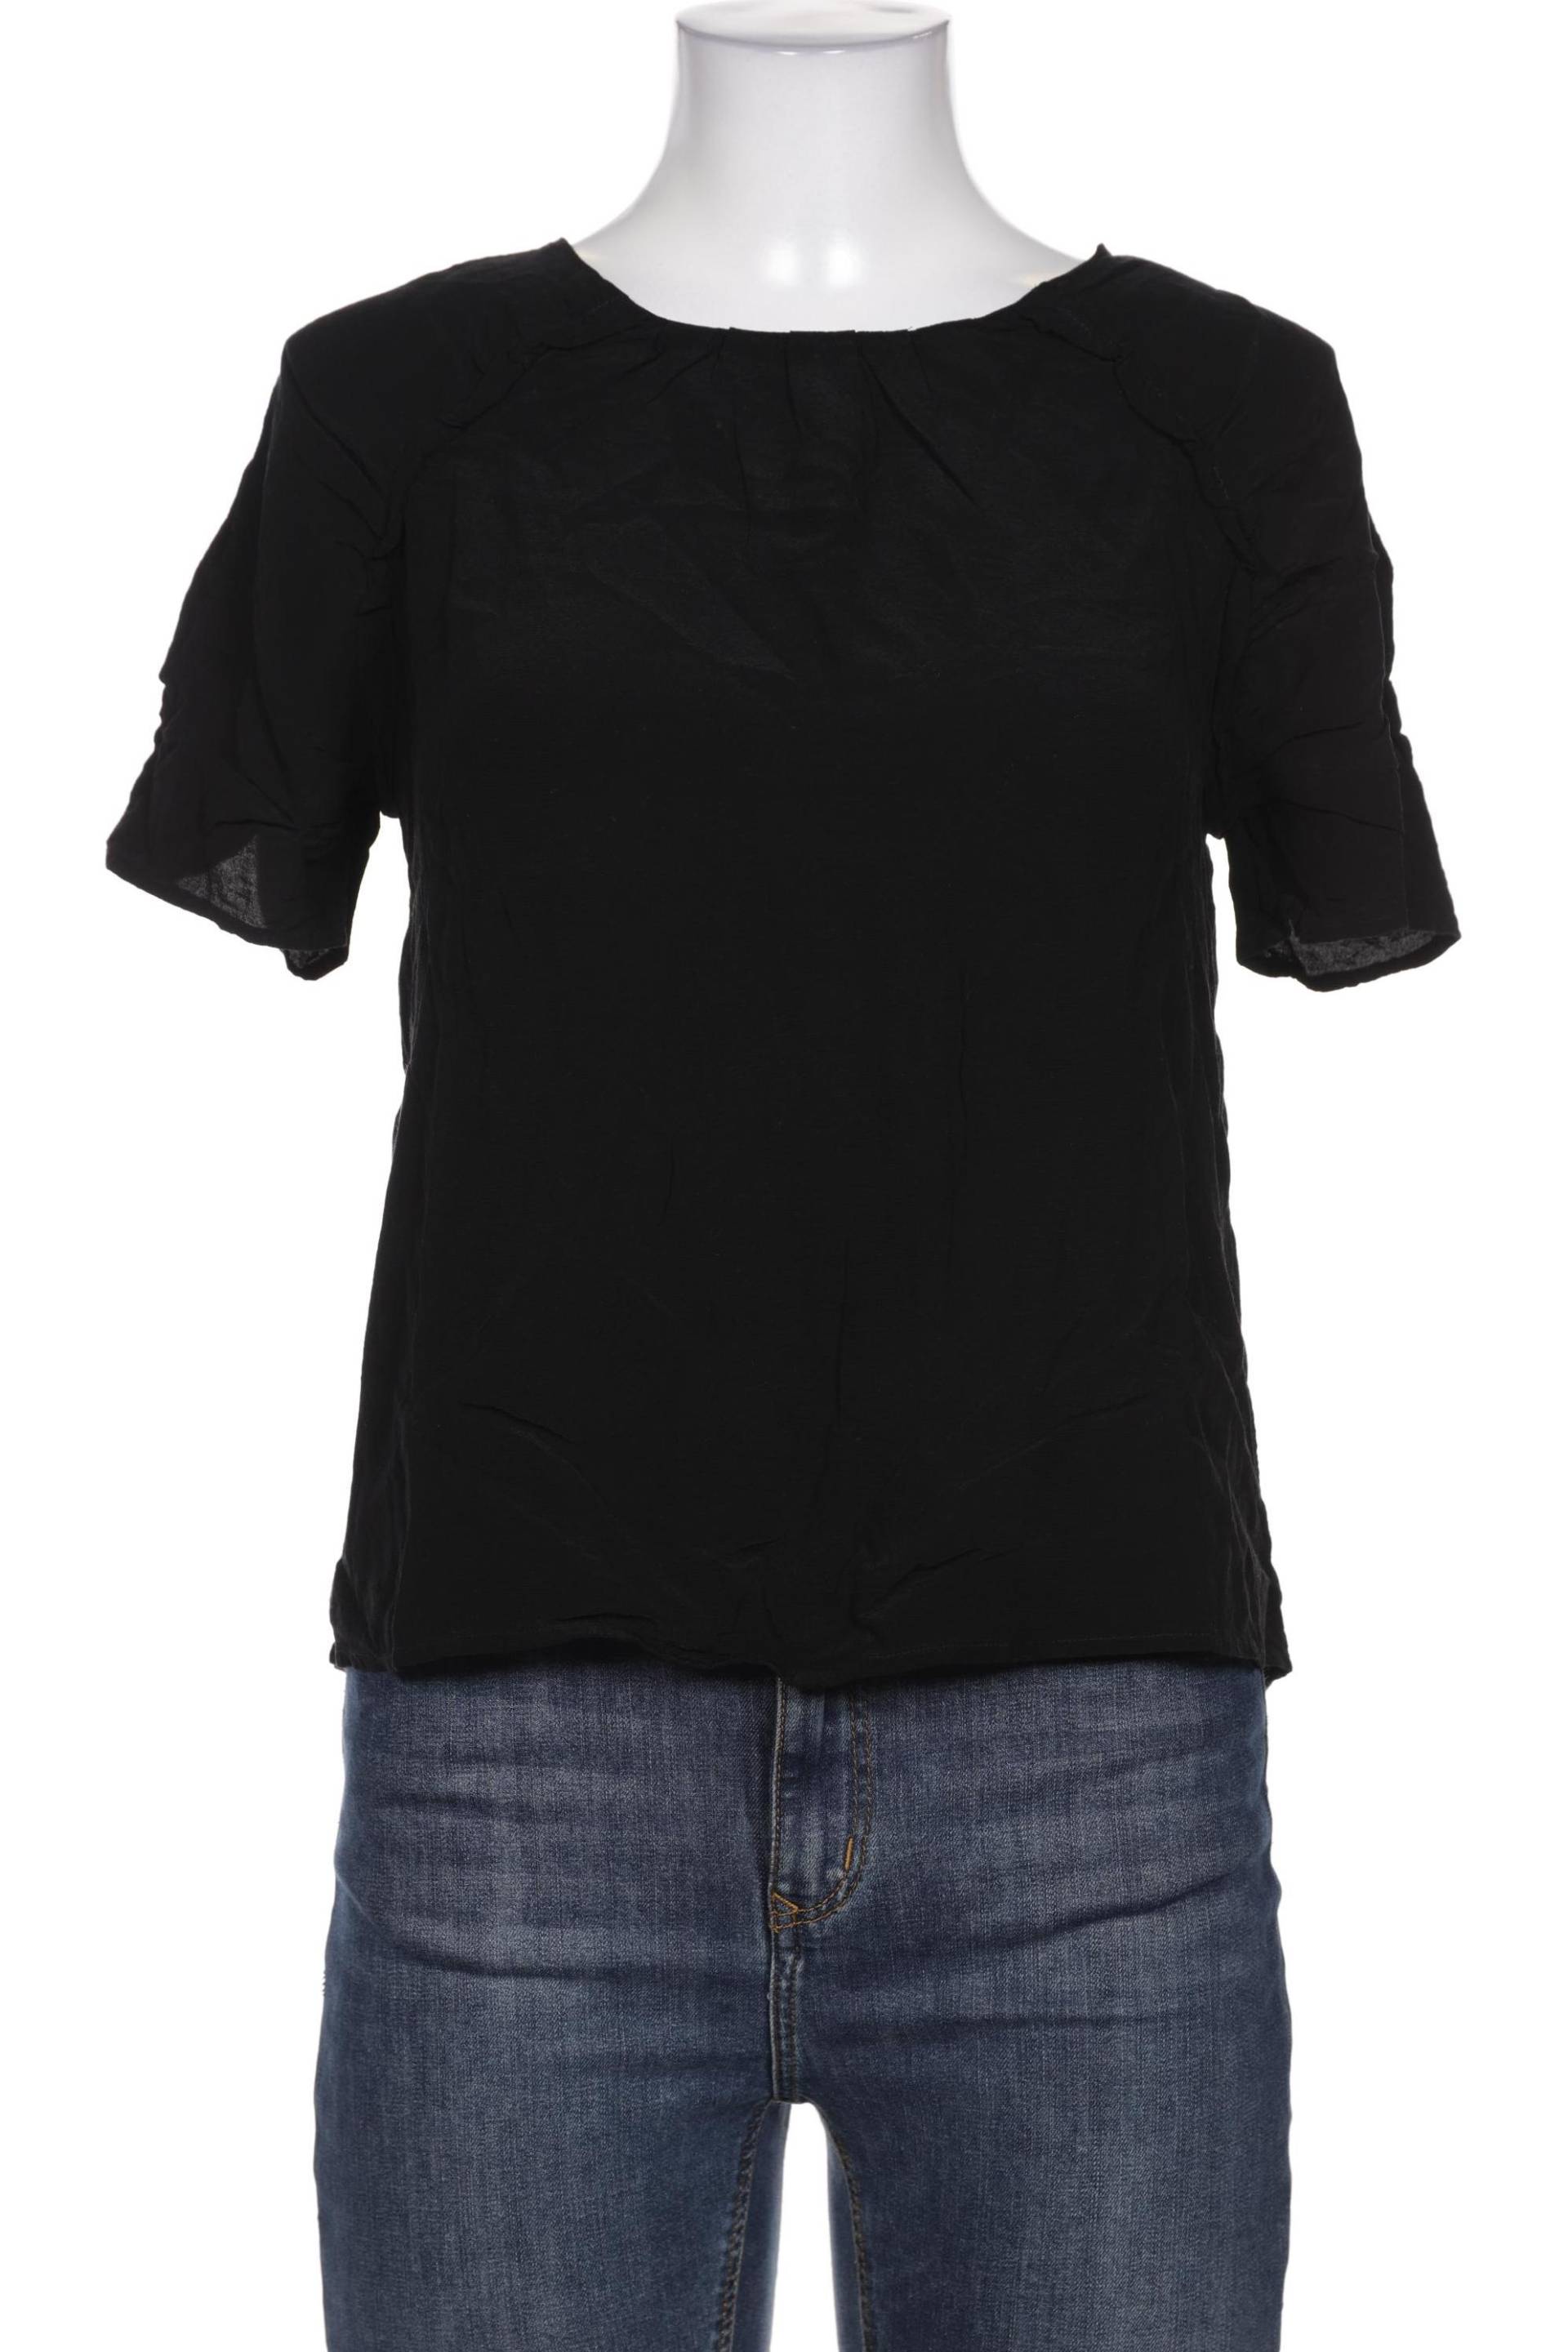 Massimo Dutti Damen Bluse, schwarz von Massimo Dutti